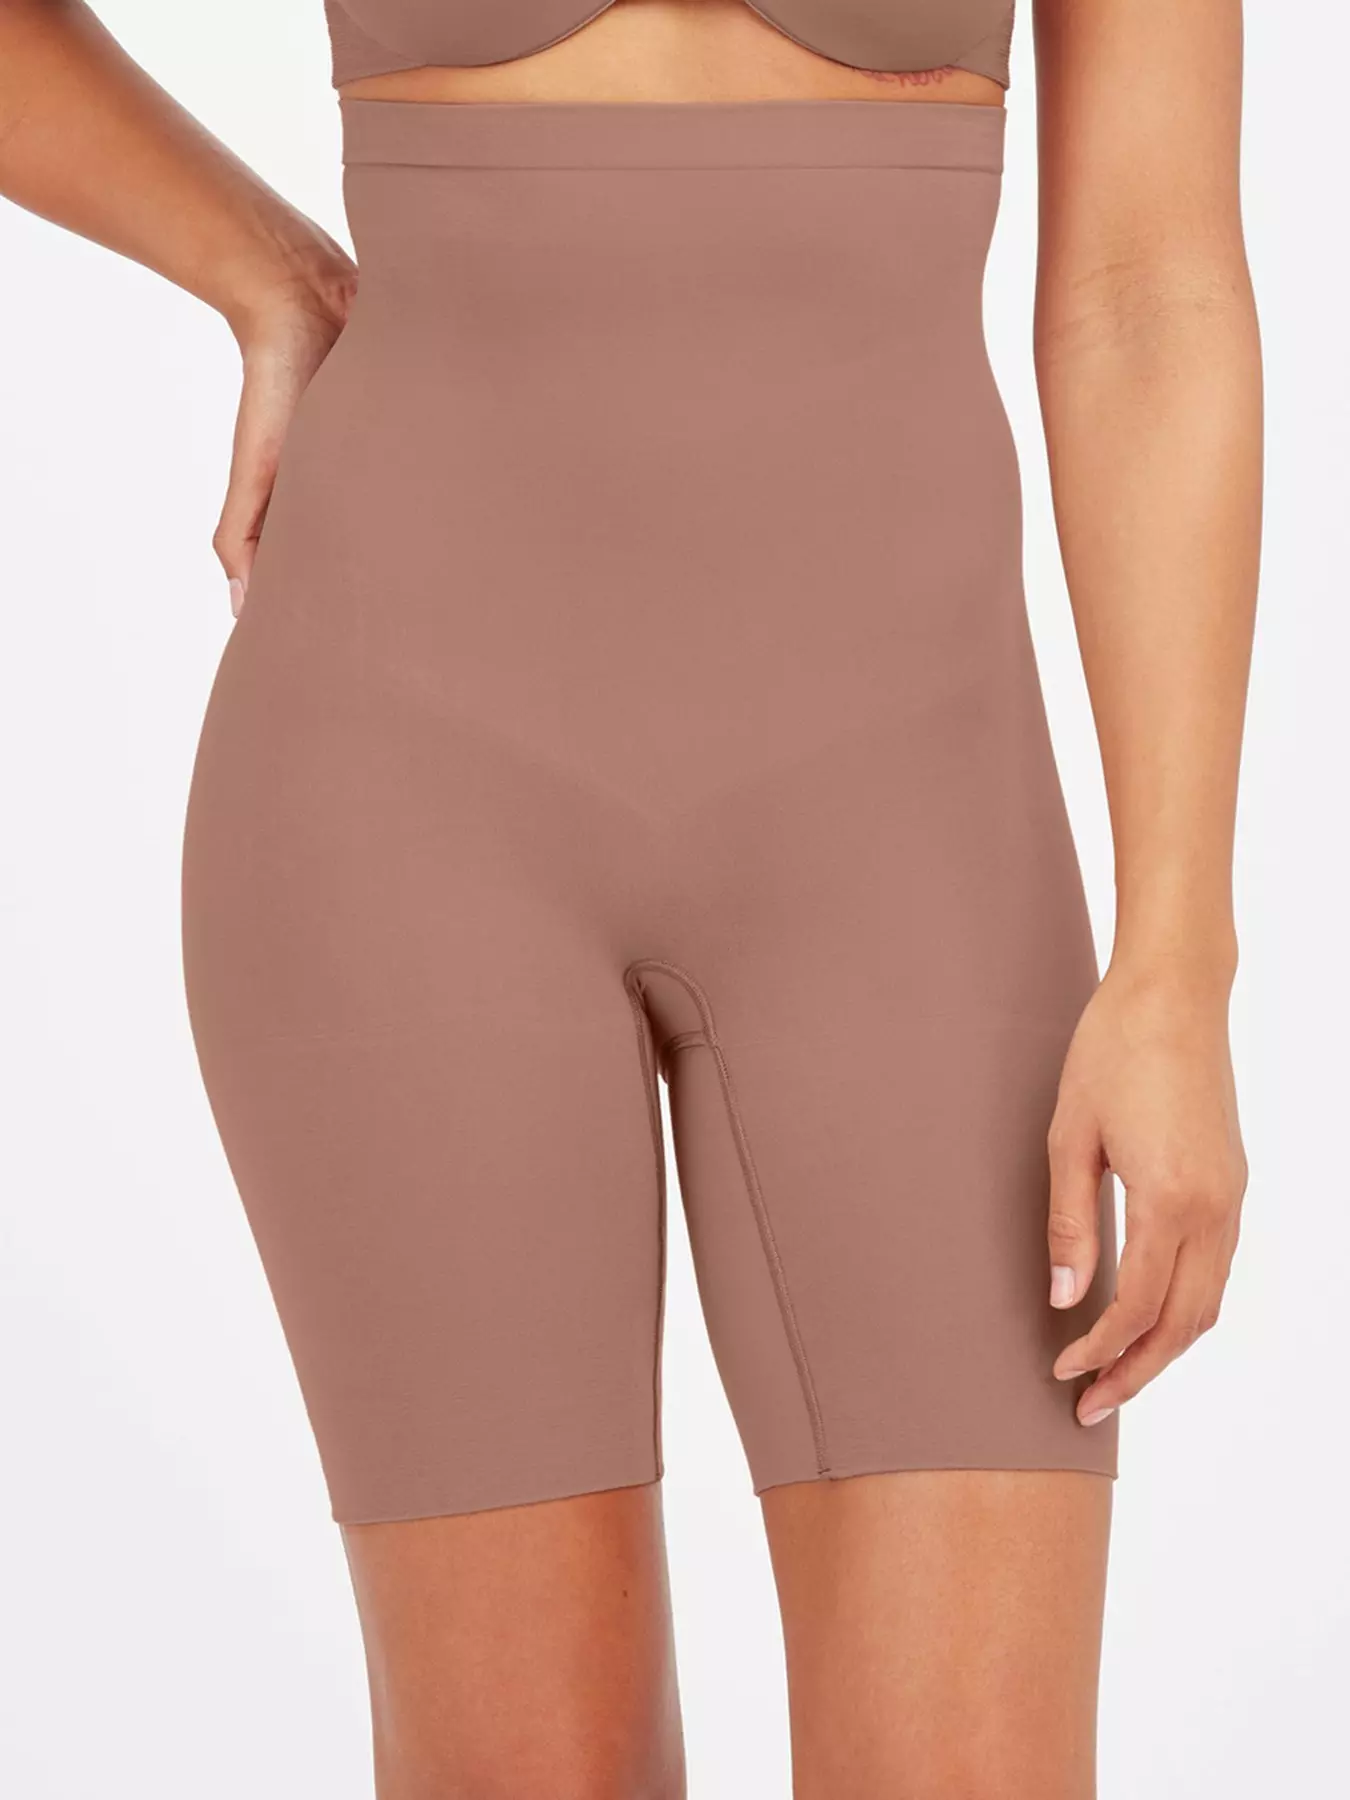 Buy Spanx Womens Power Series Higher Power Panties Size Medium in Nude 51%  Nylon, 49% Spandex/Elastane at